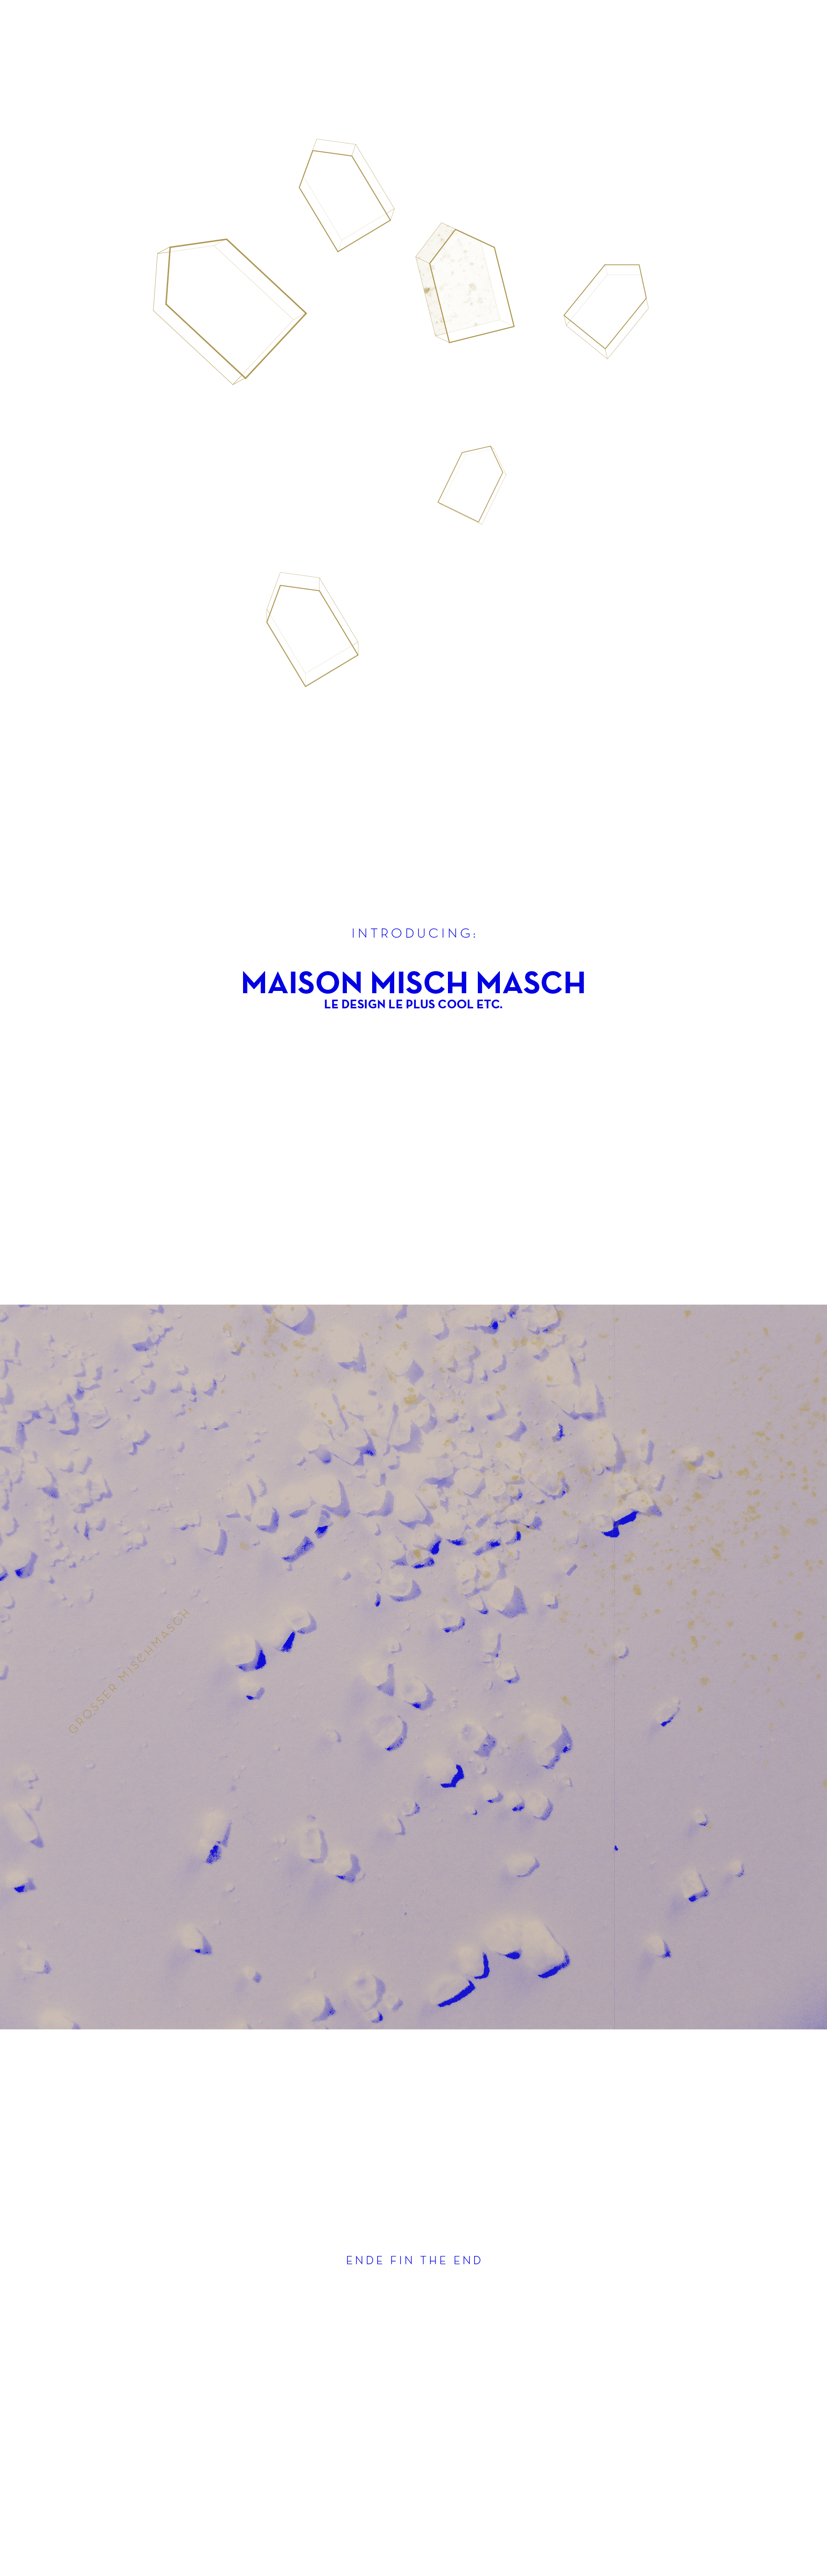 Maison Misch Masch